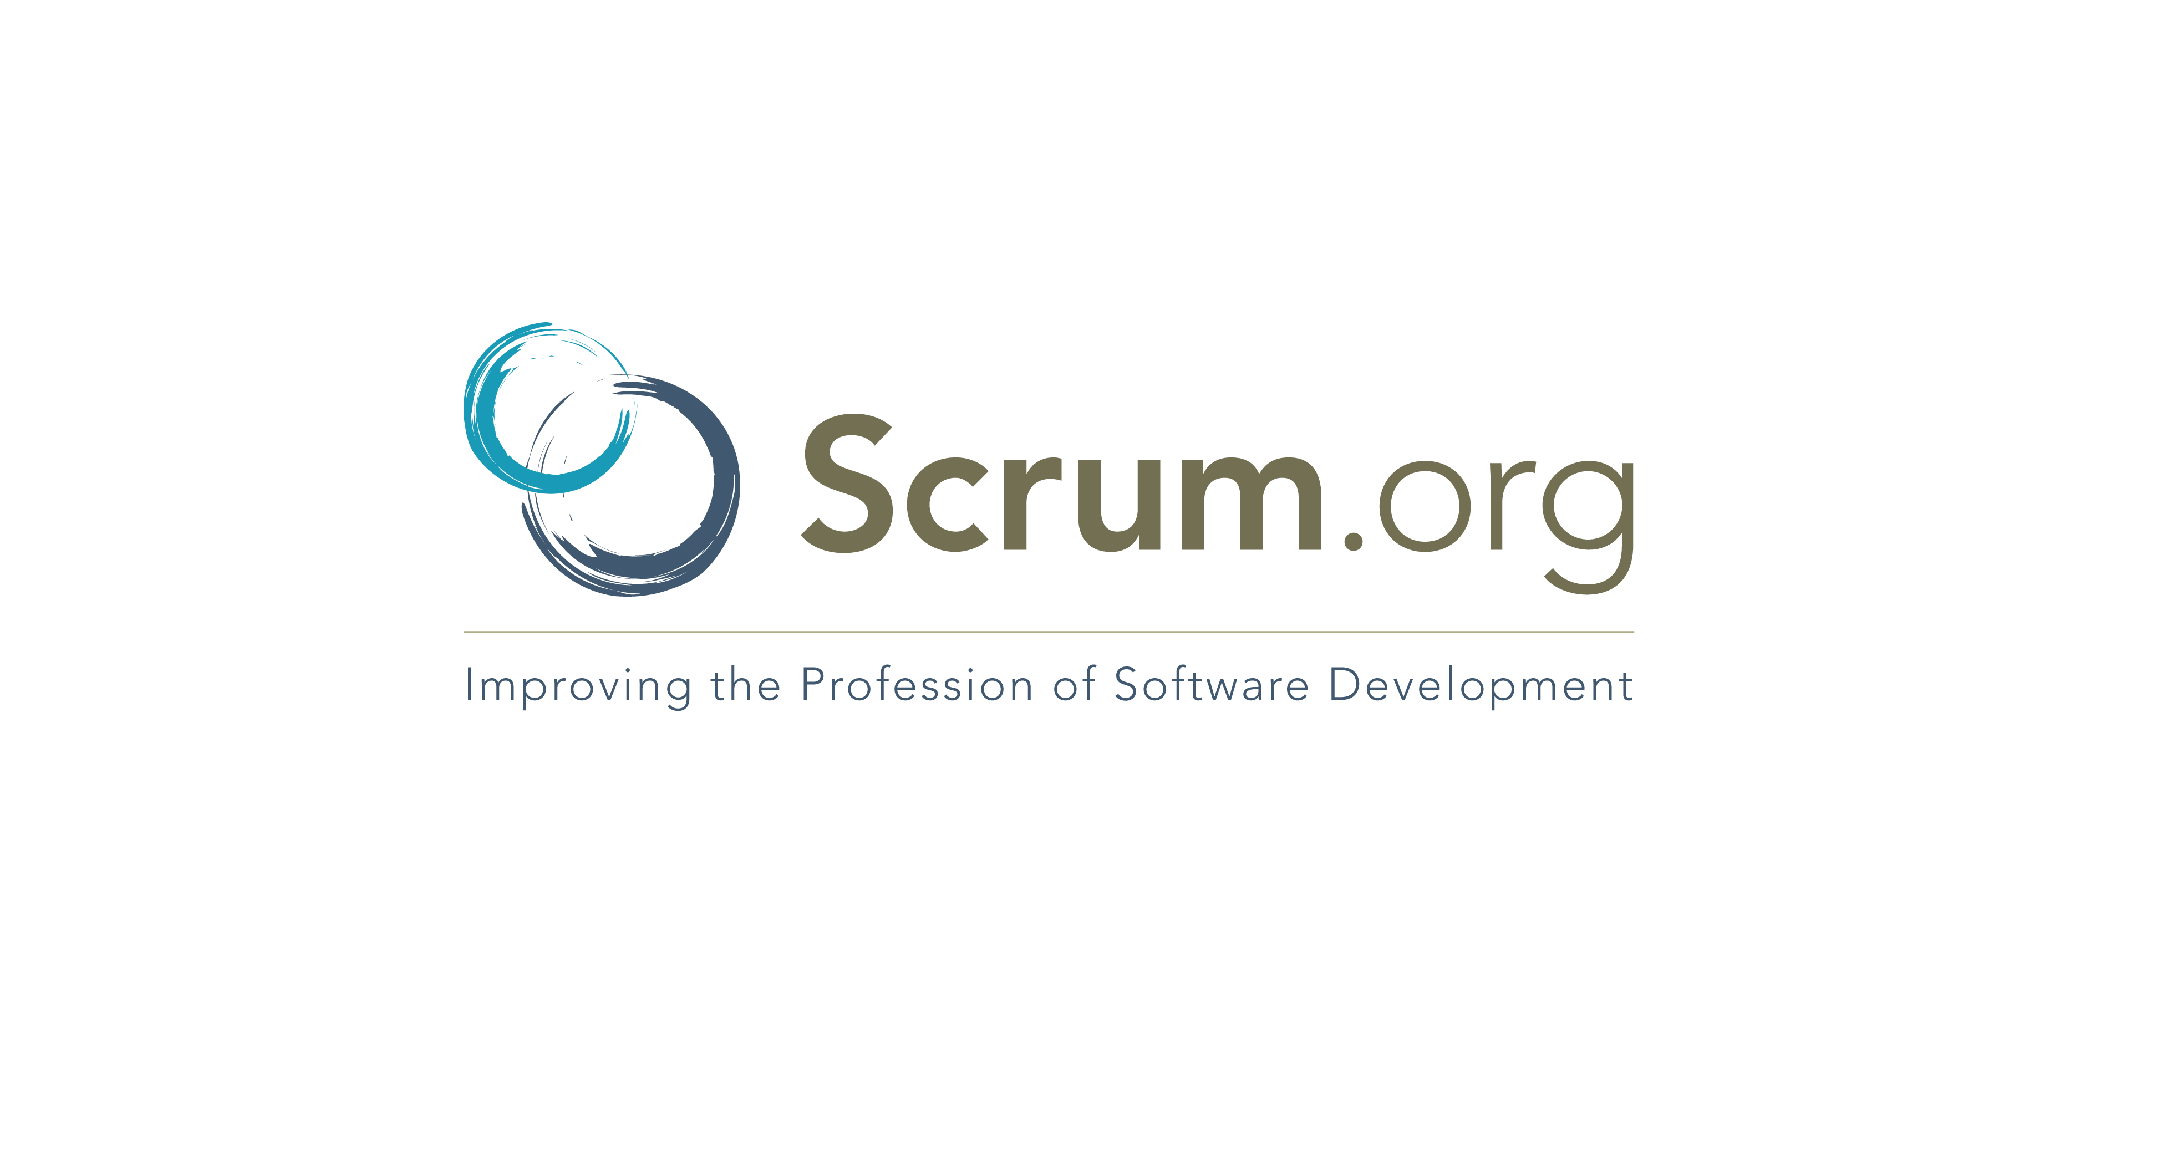 Logos org. Scrum logo. Org logo. Arxiv.org logo.